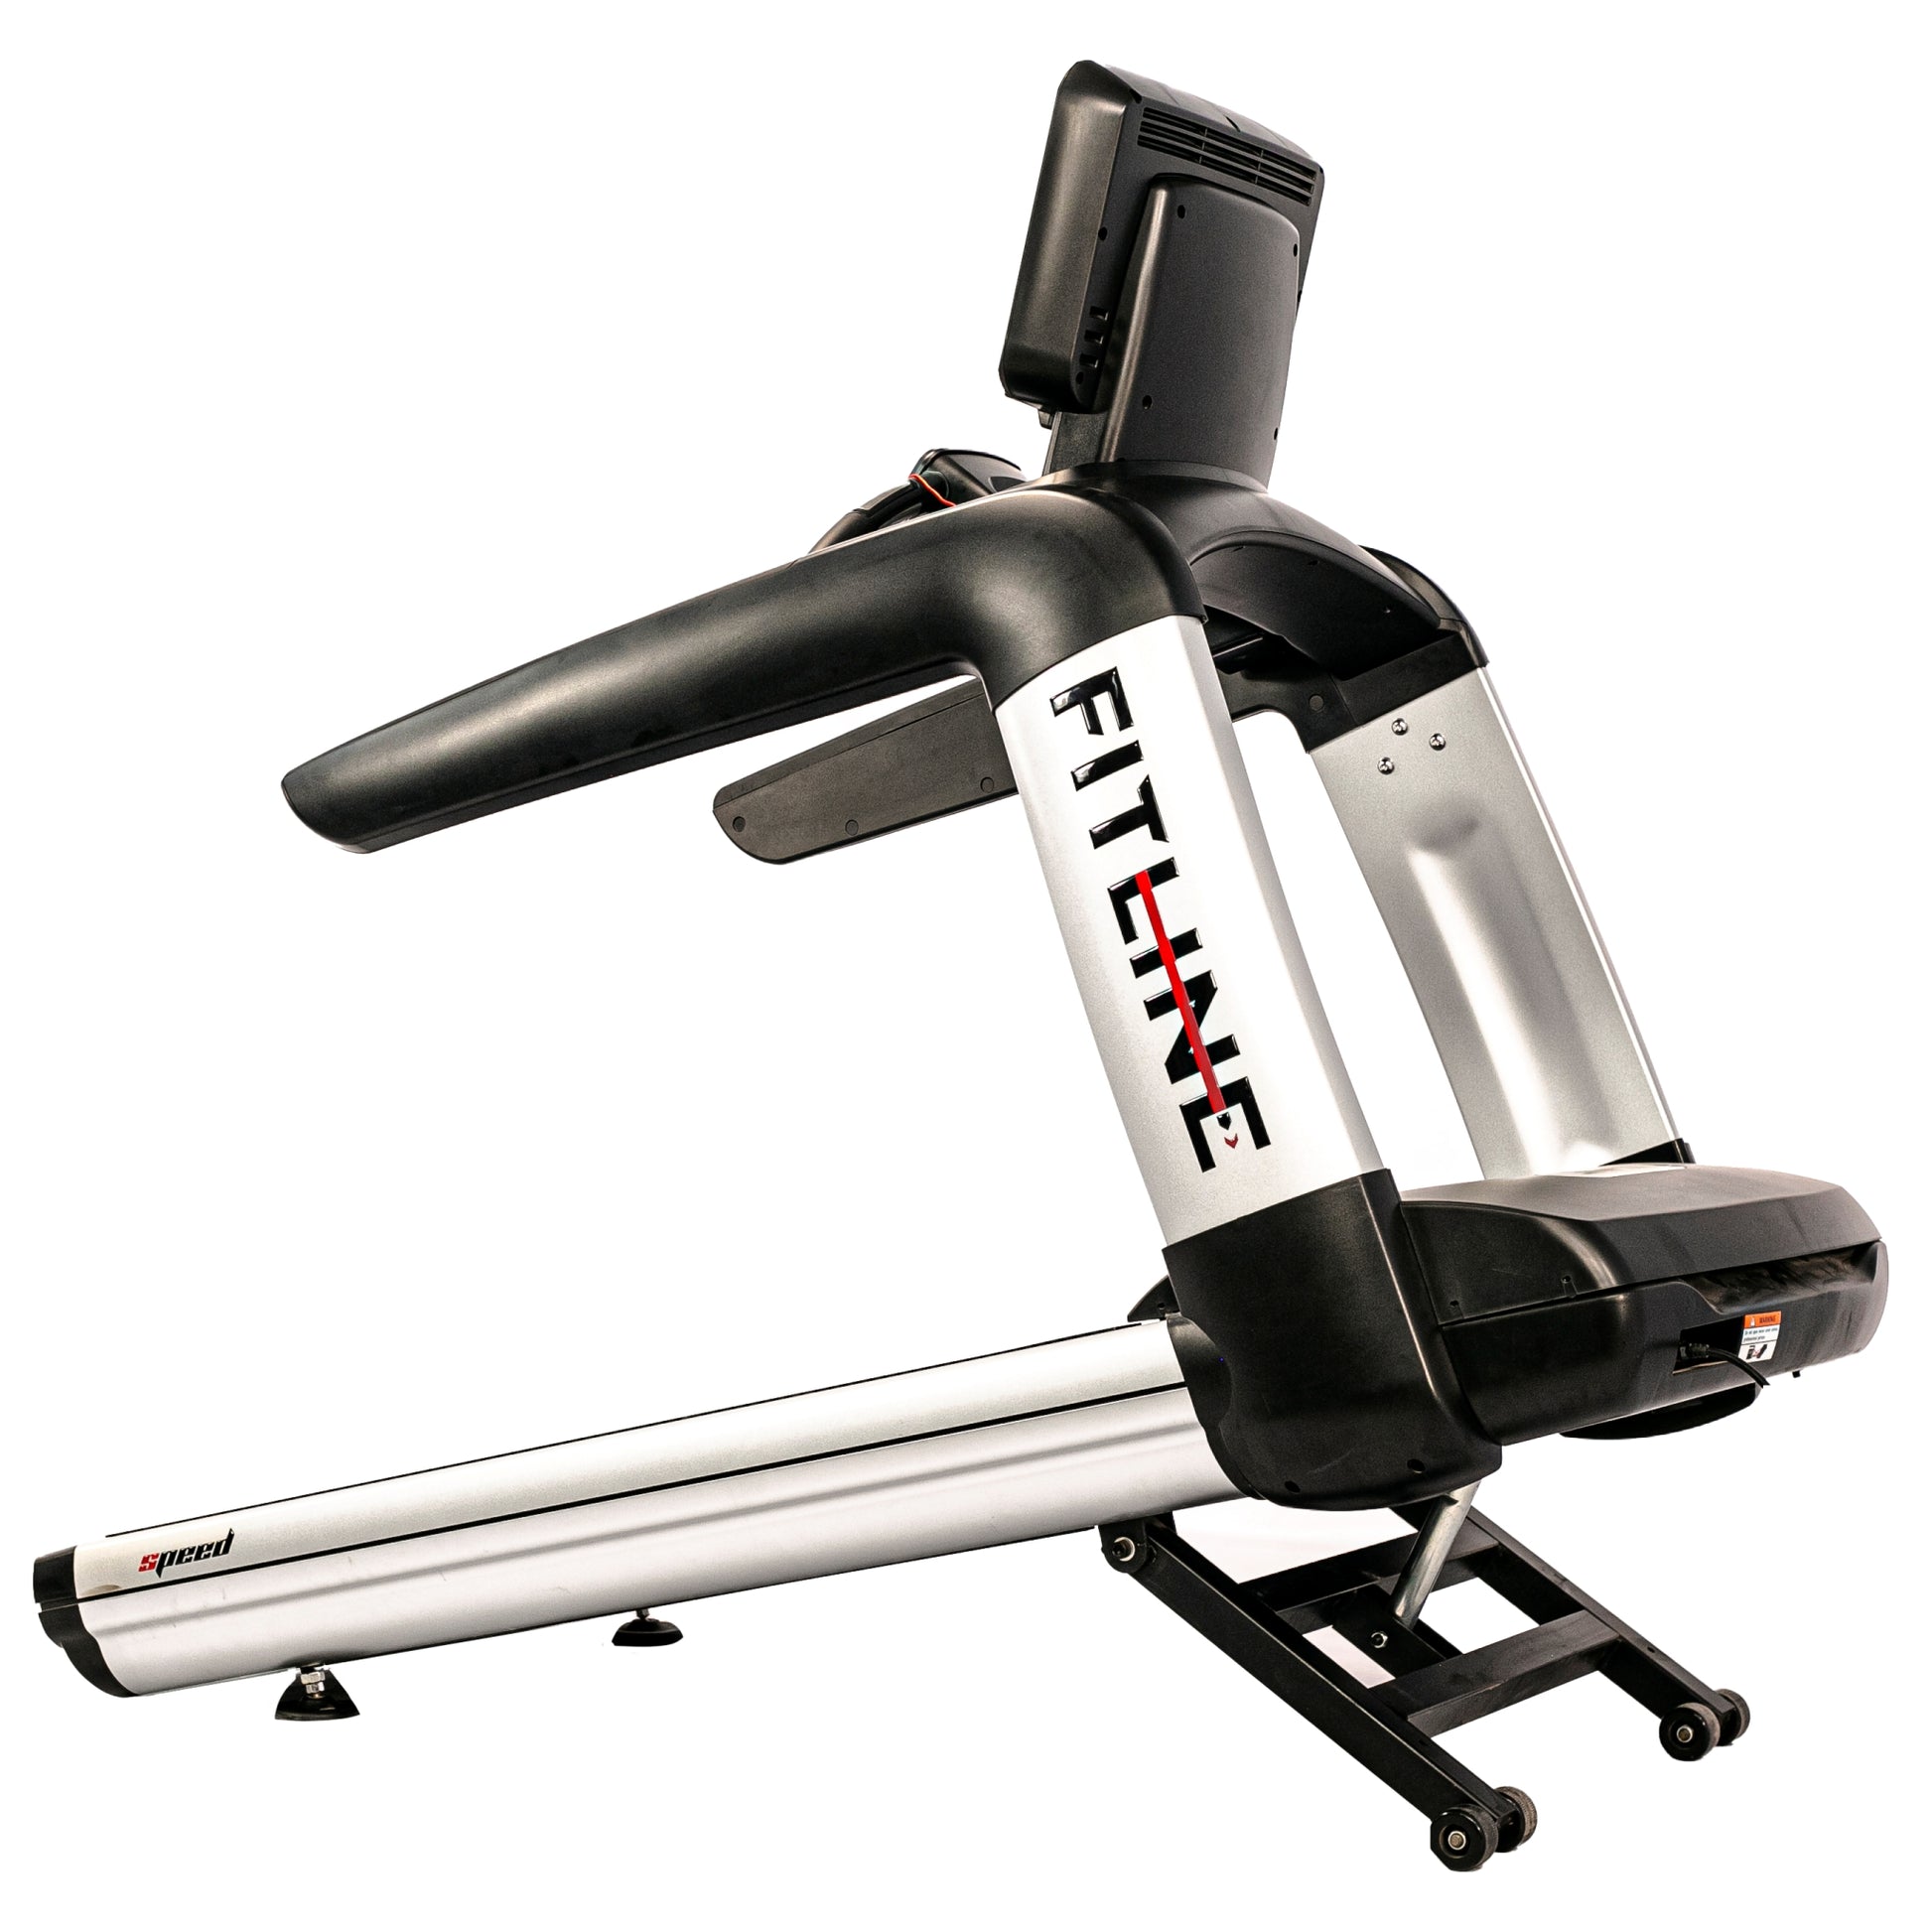 Speed_Treadmills- Cardio Exercise Fitness Equipment